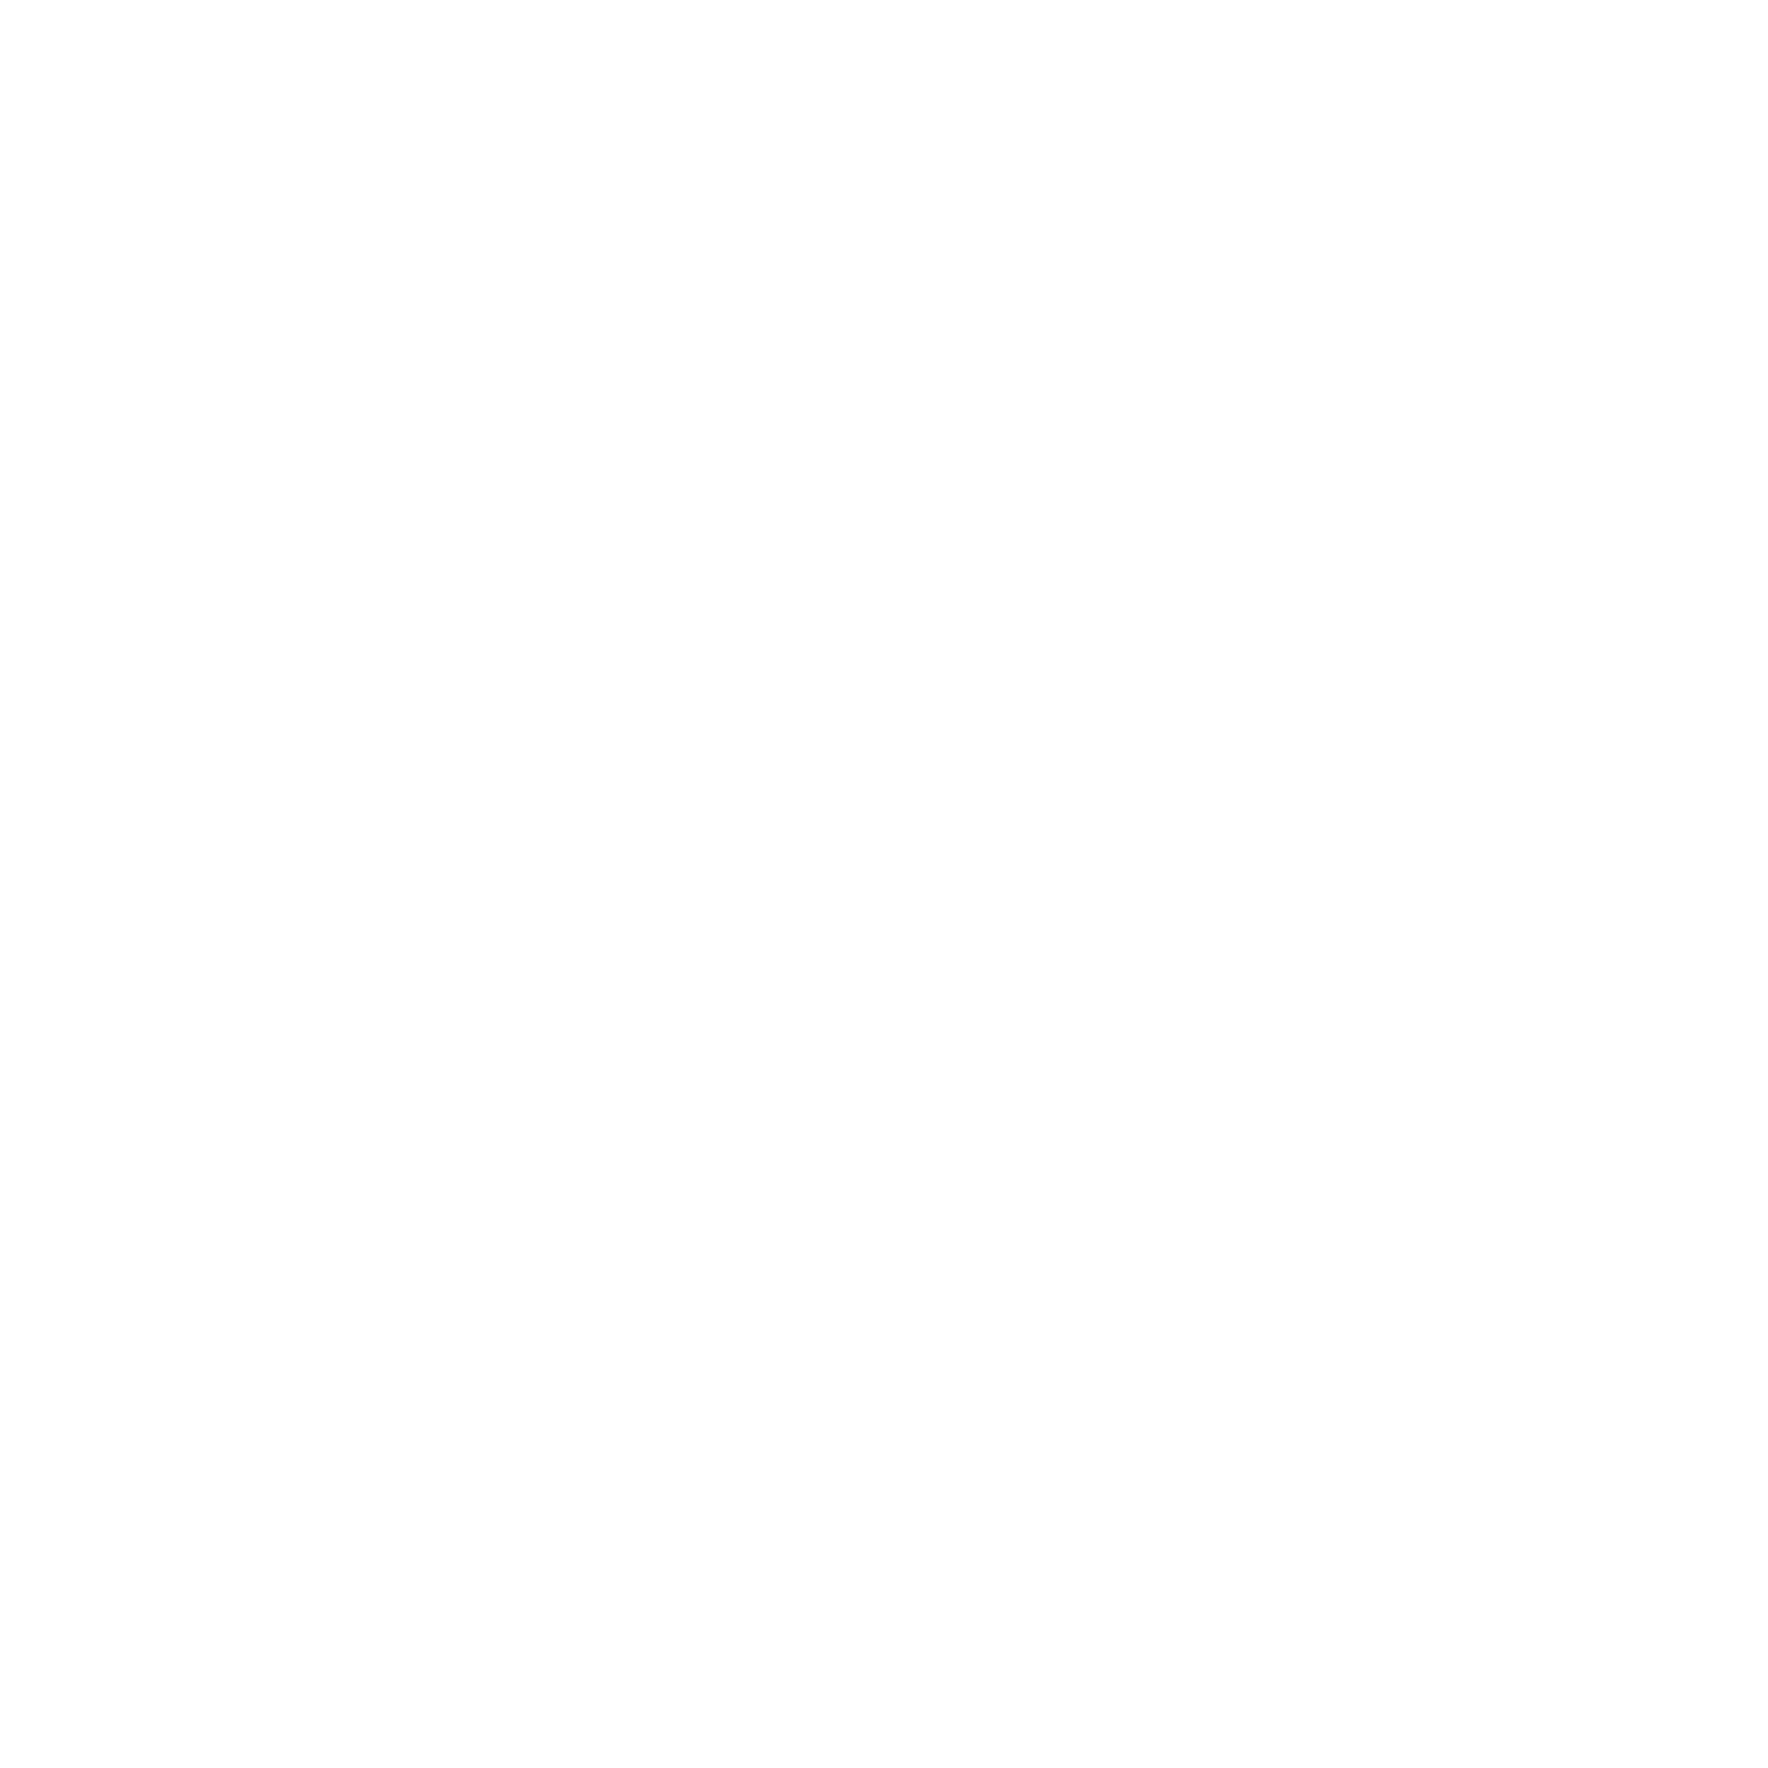 World Affairs Council of Cincinnati and Northern Kentucky